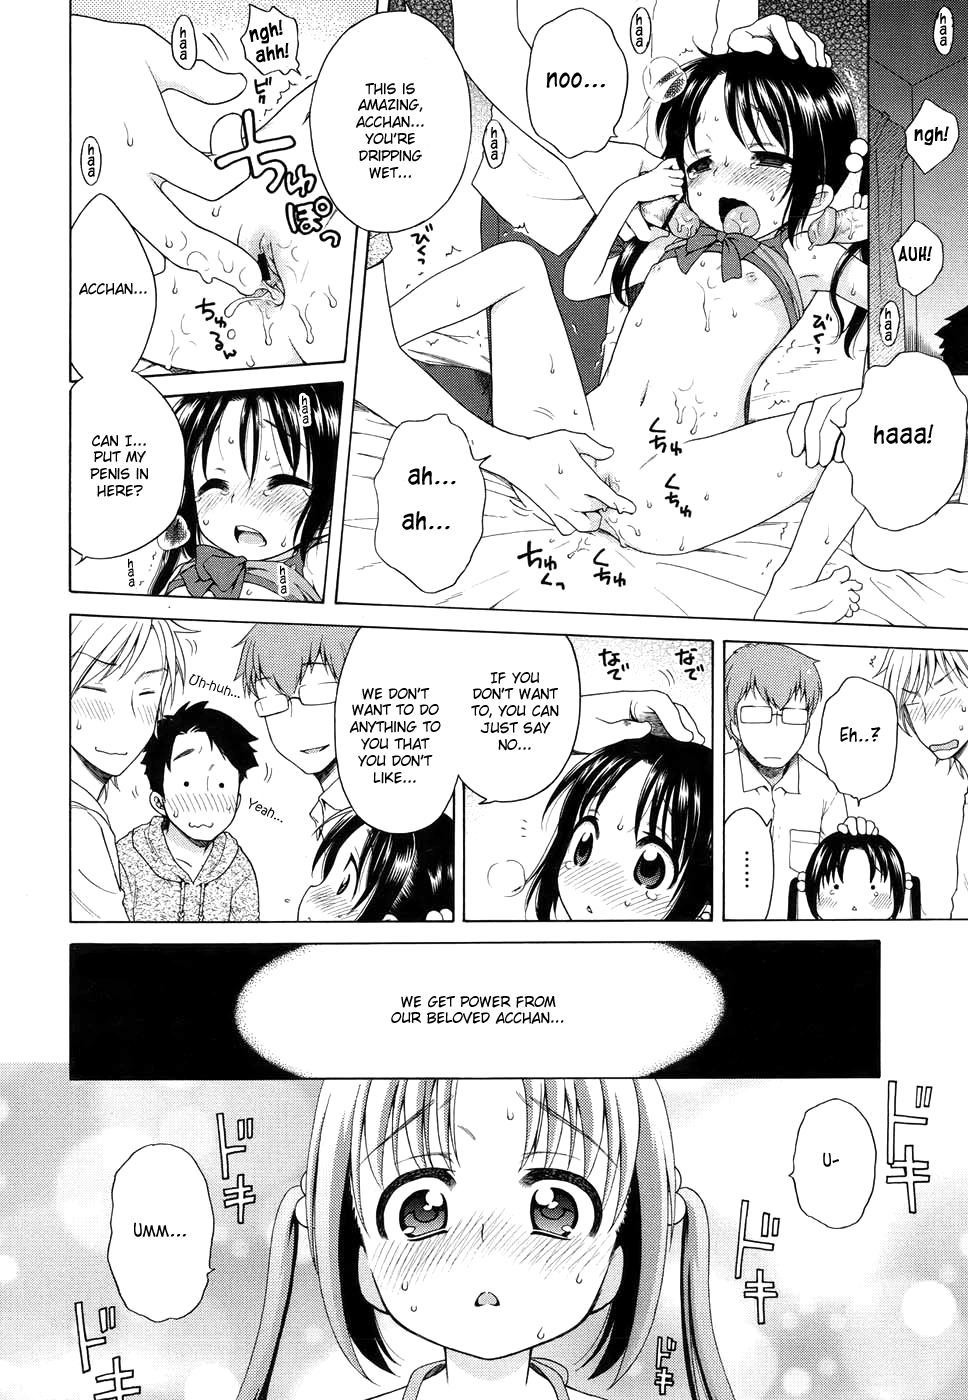 The Light of Tsukimi Manor 1-6 hentai manga picture 18